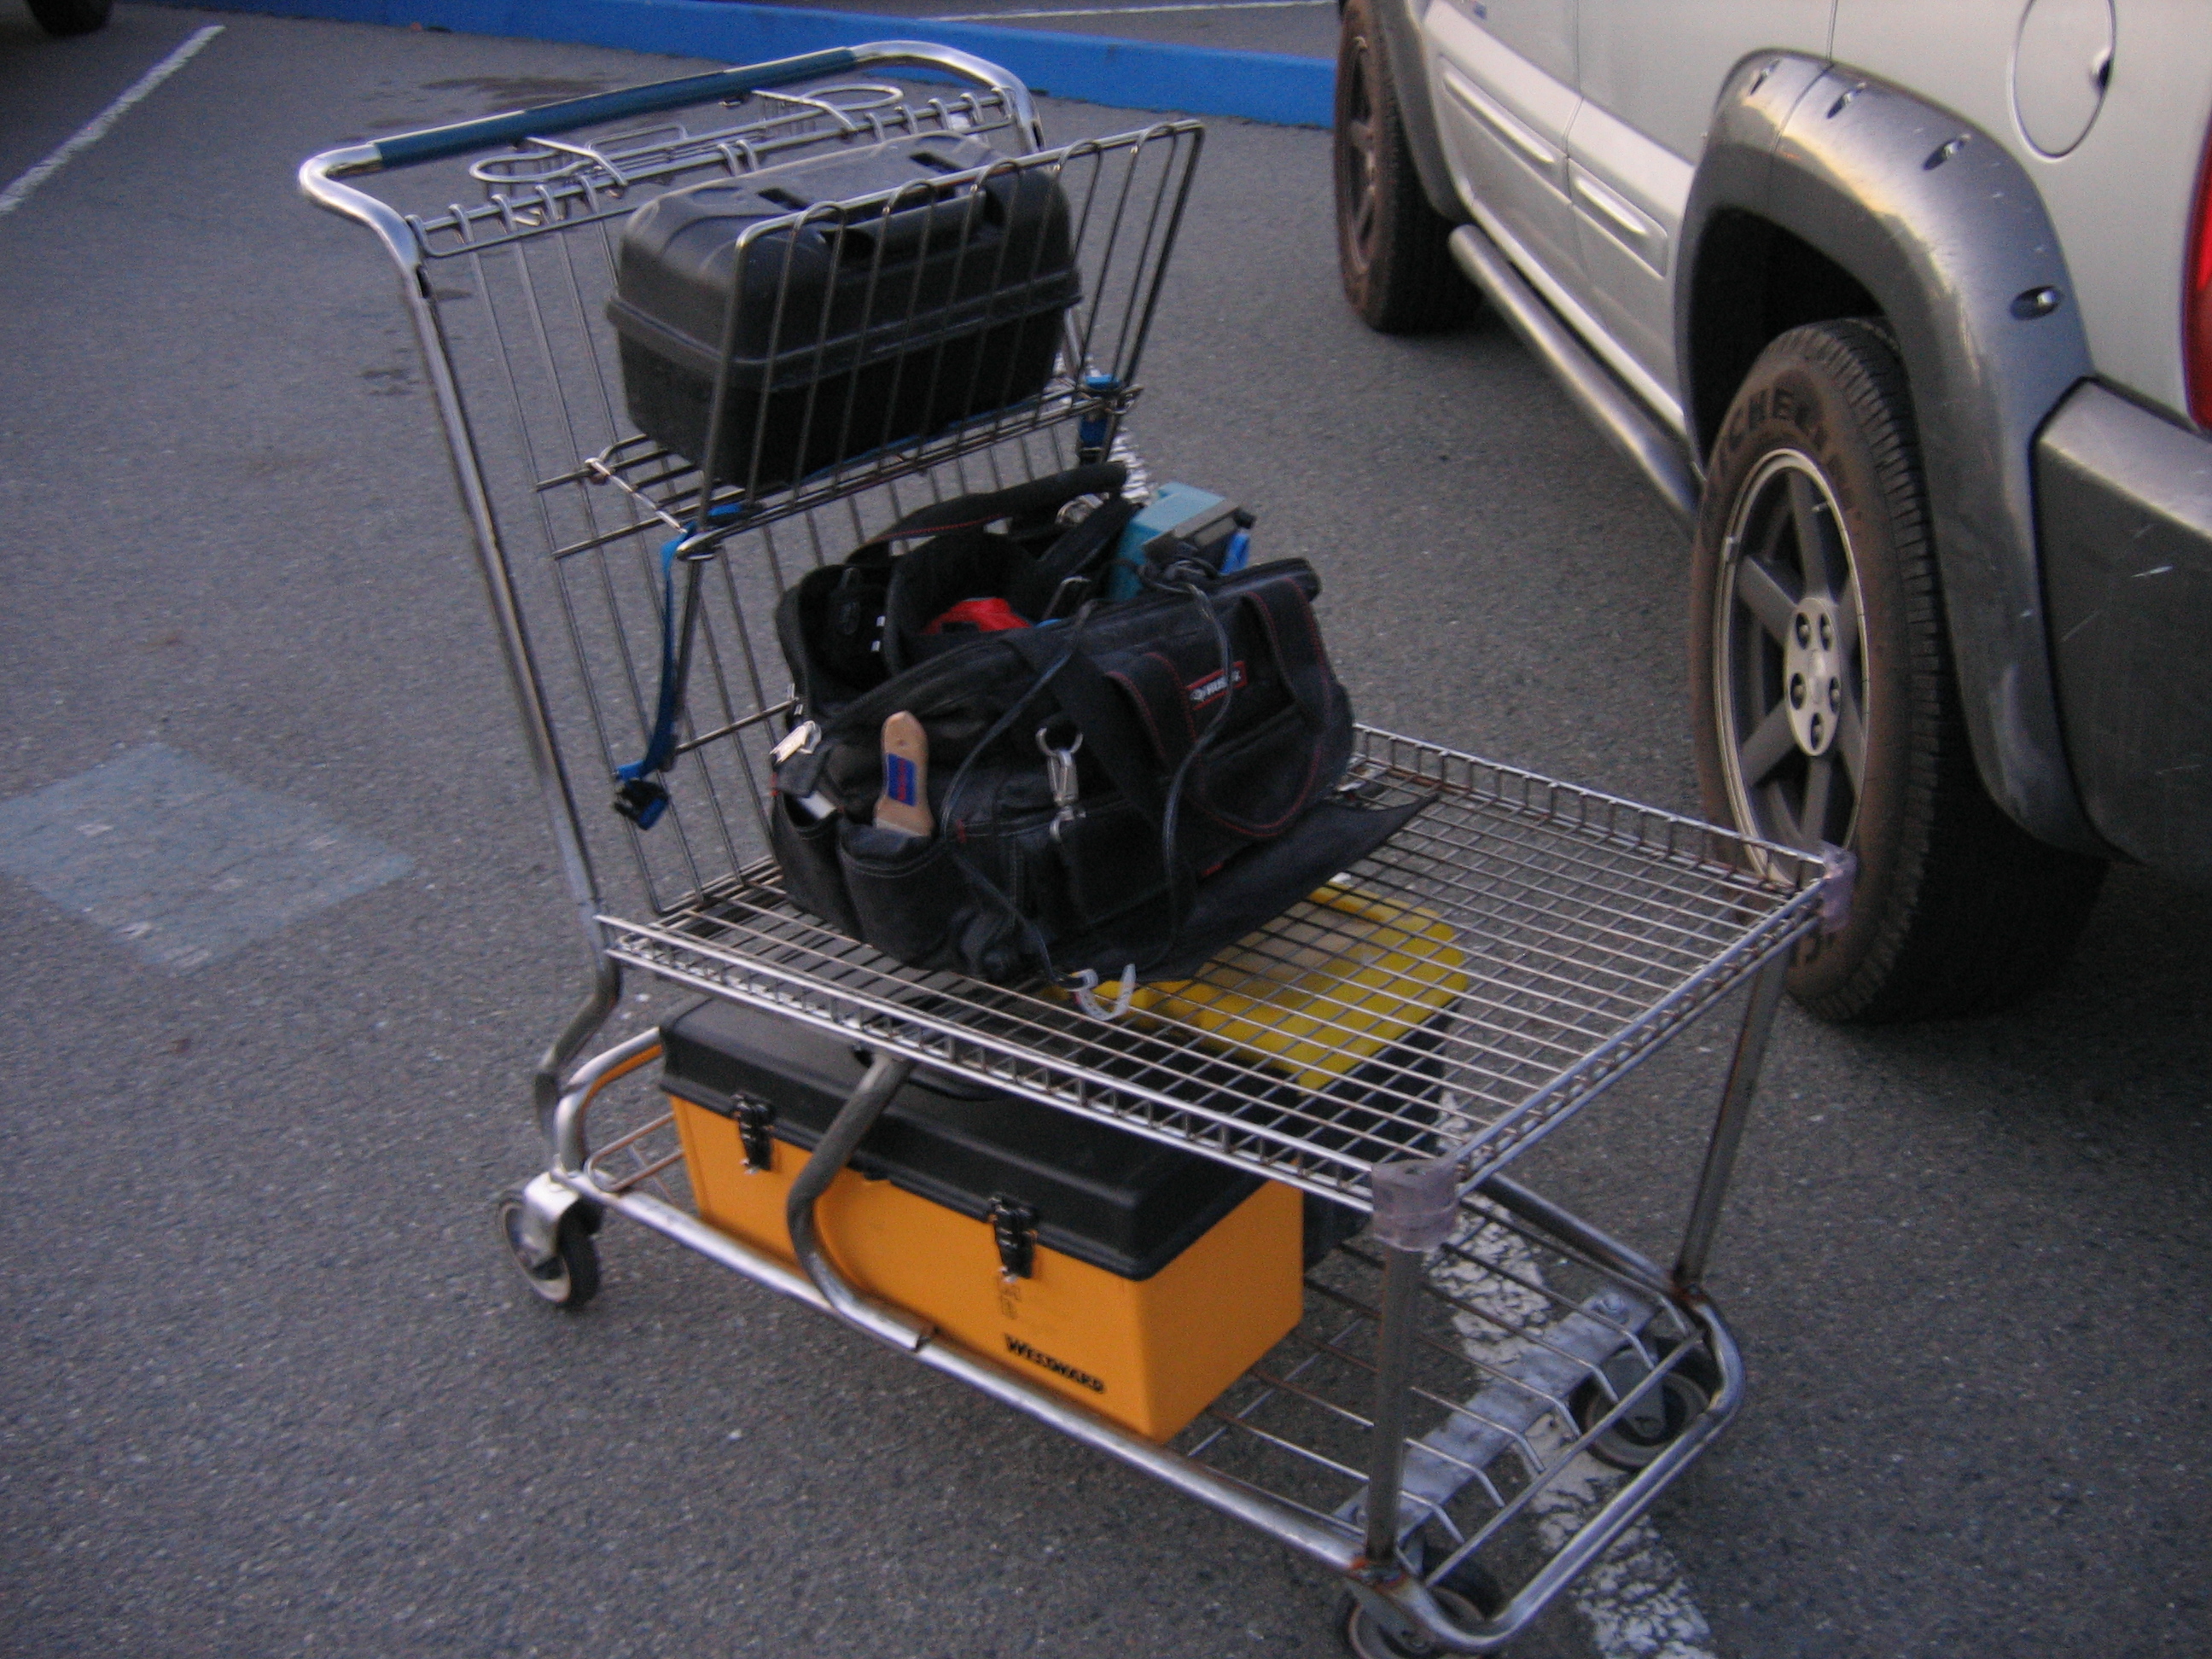 Chop a shopping cart into a tool cart. Simple!